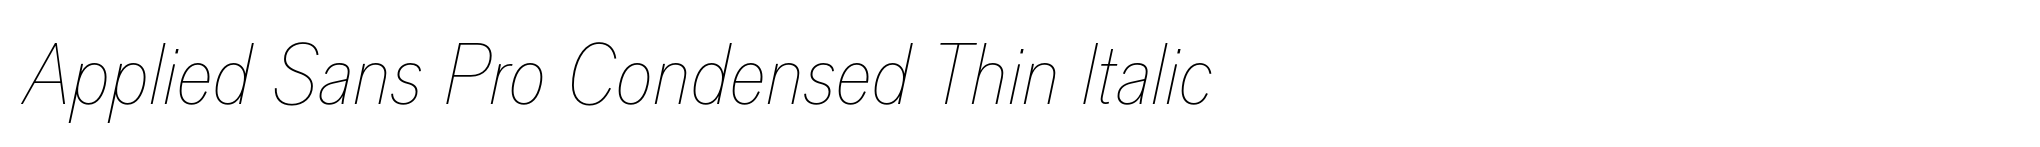 Applied Sans Pro Condensed Thin Italic image